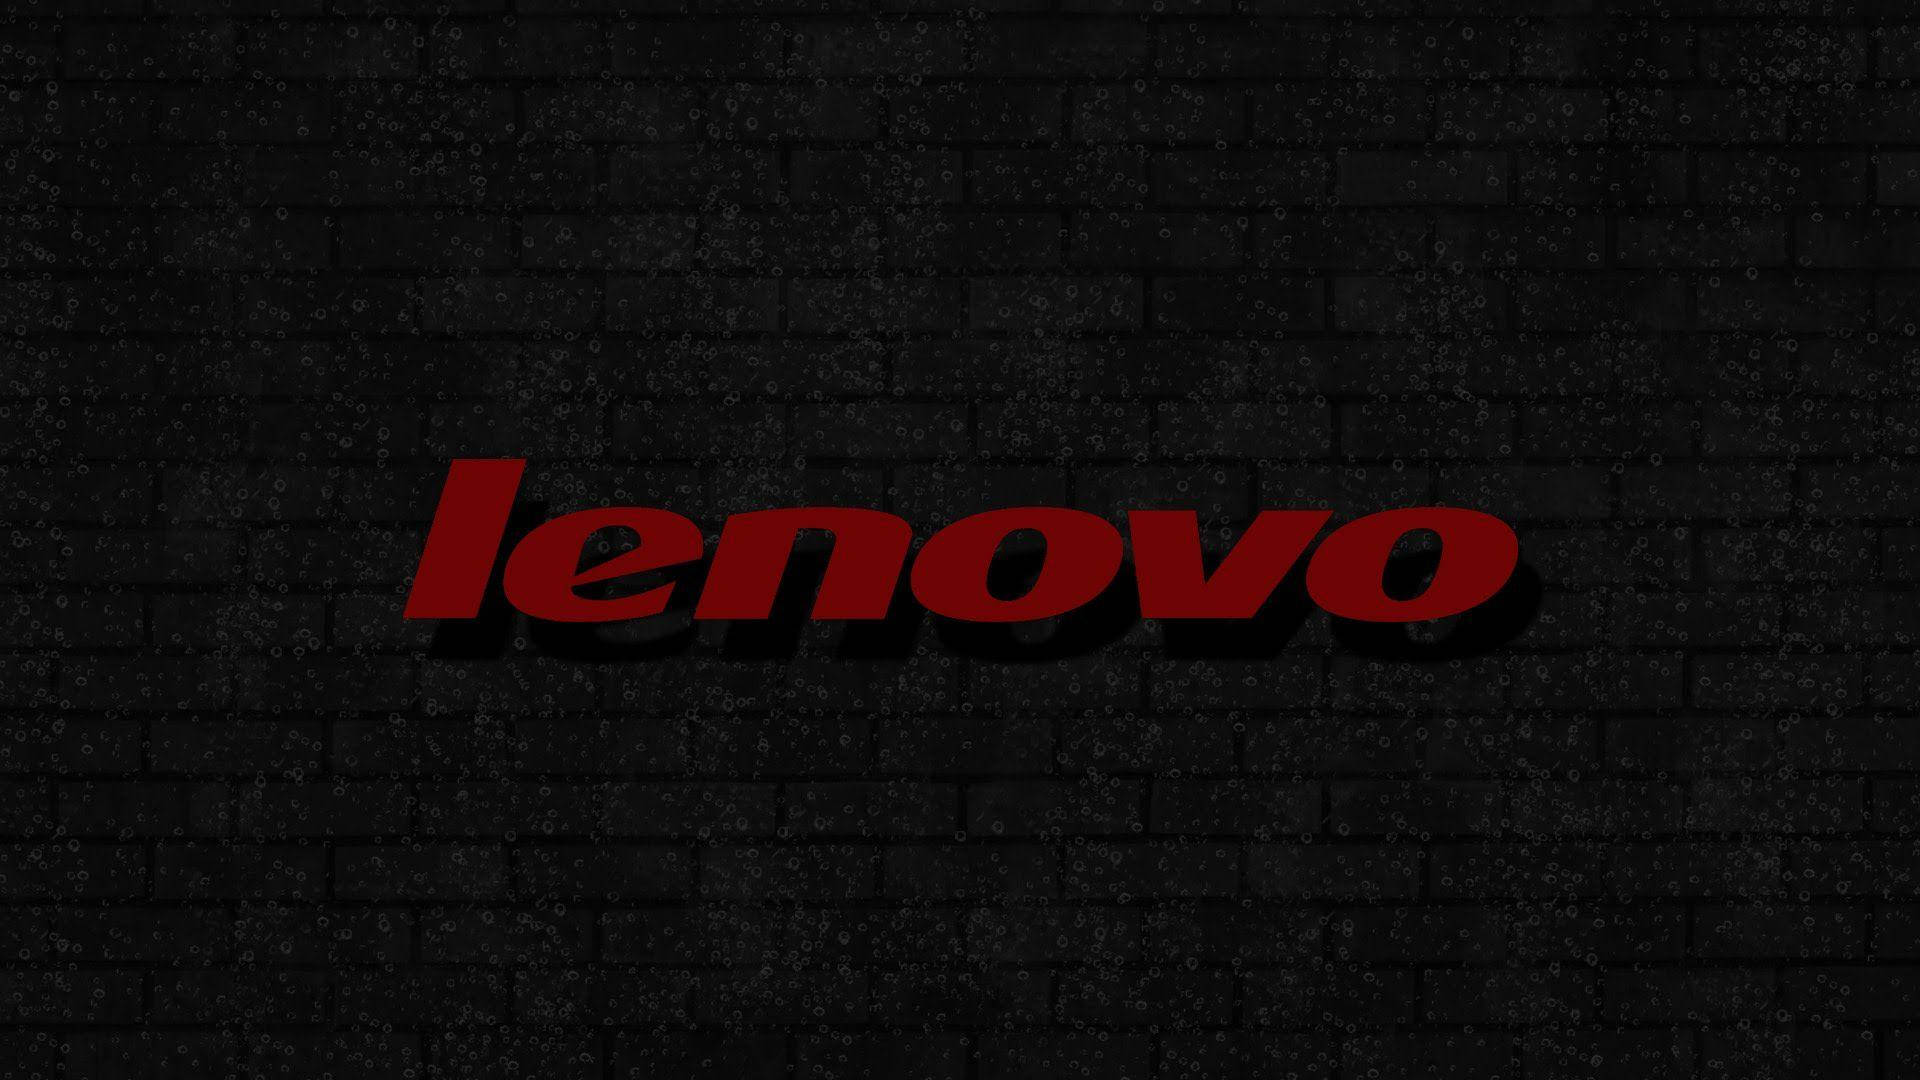 Paredesde Ladrillo Negro, Lenovo Hd Rojo. Fondo de pantalla